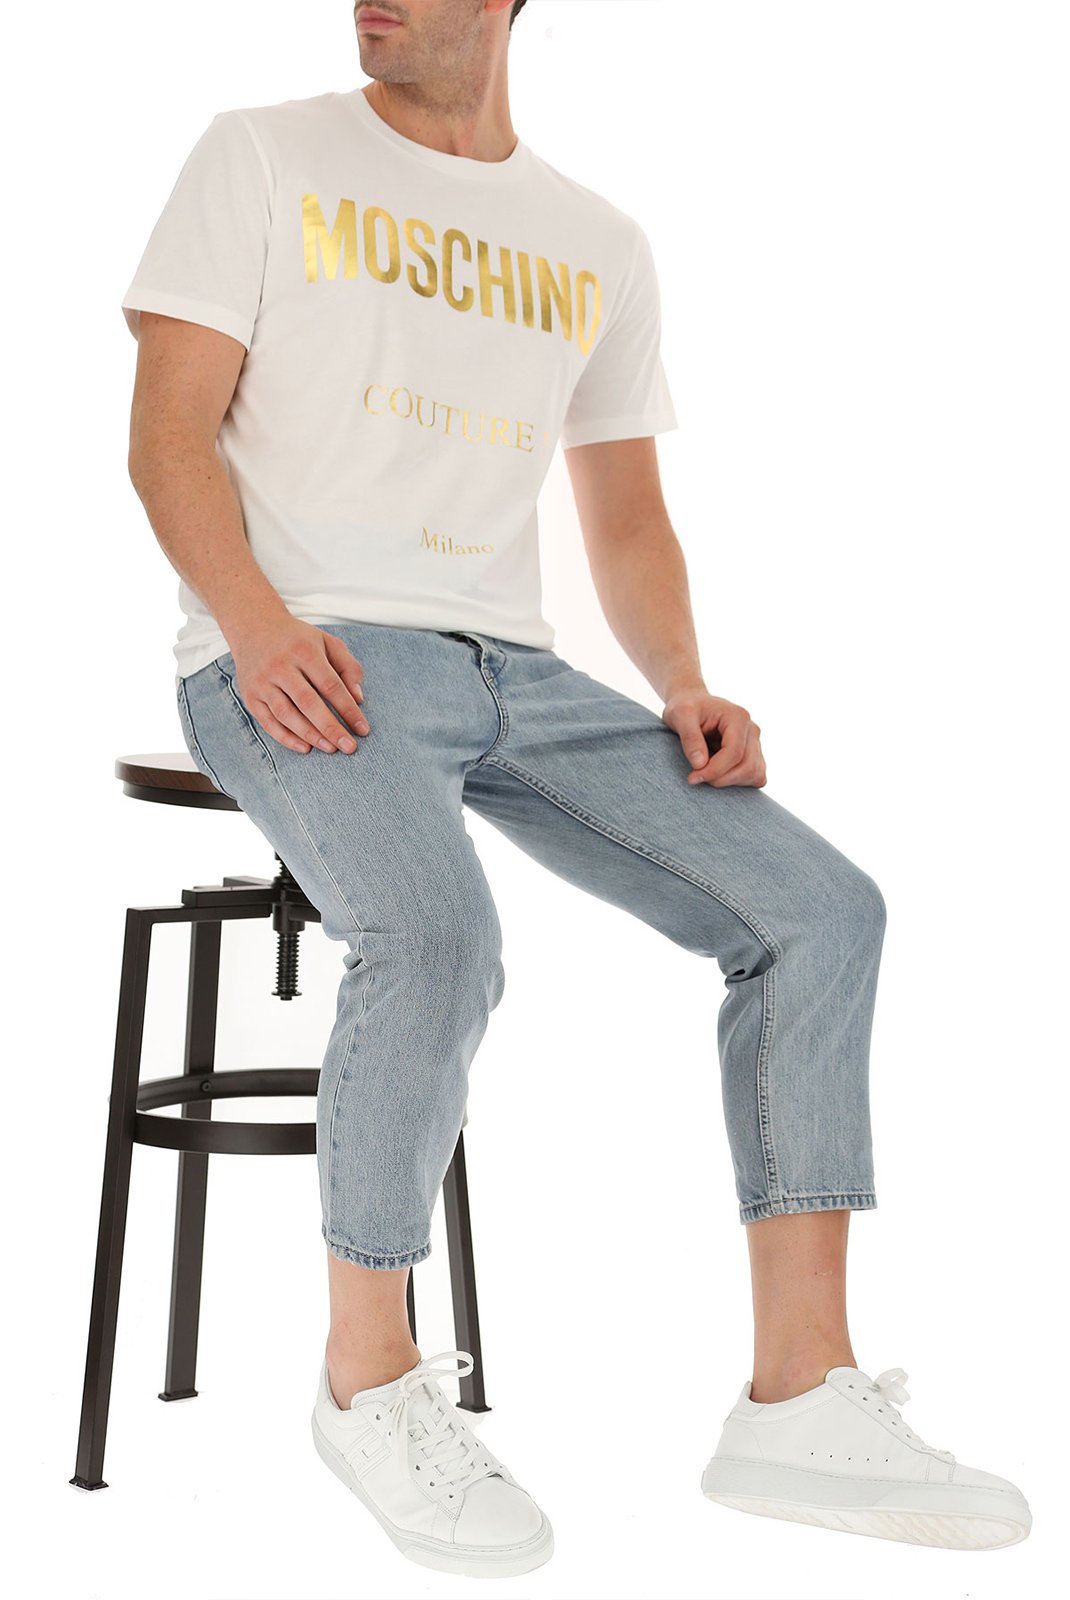 Tee-shirts  Moschino ZJ0707 1002 WHITE